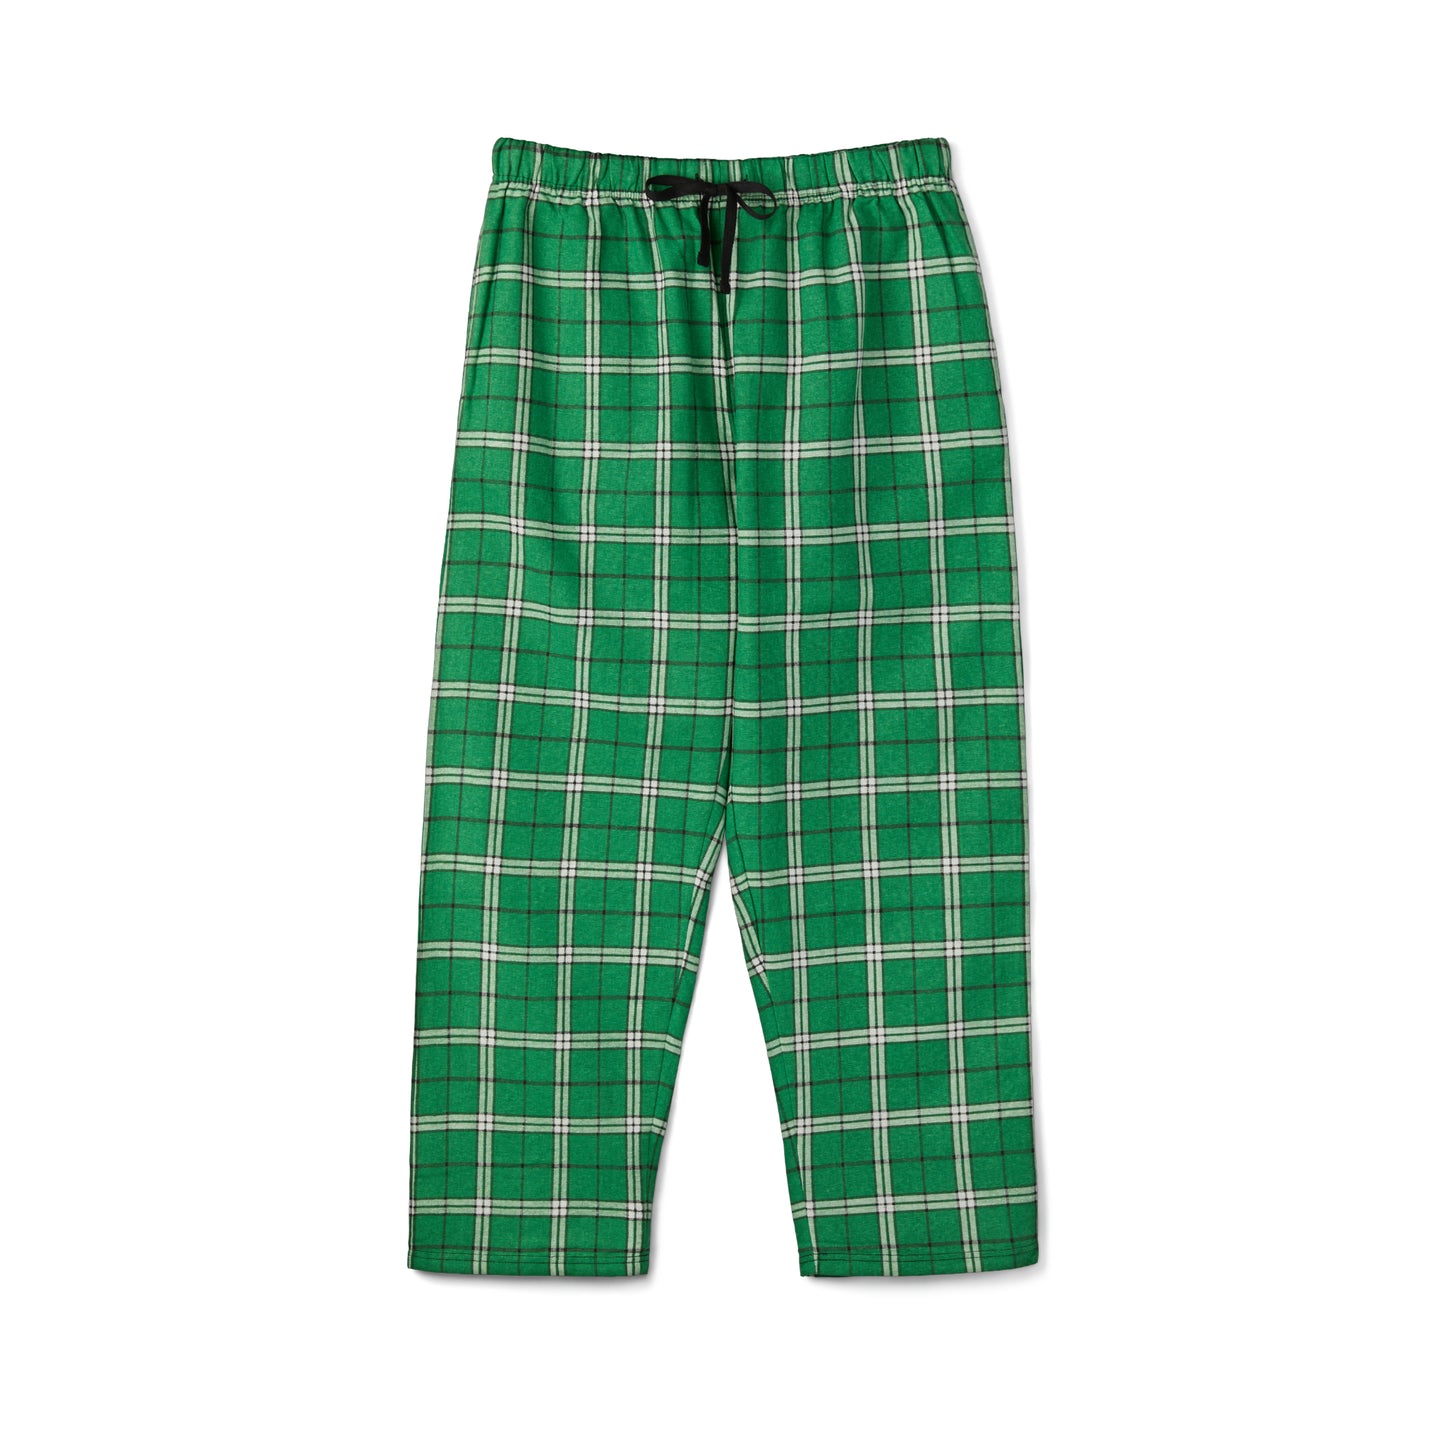 Green Gnomes Men's Long Sleeve Pajama Set, Sizes Small to 2XL